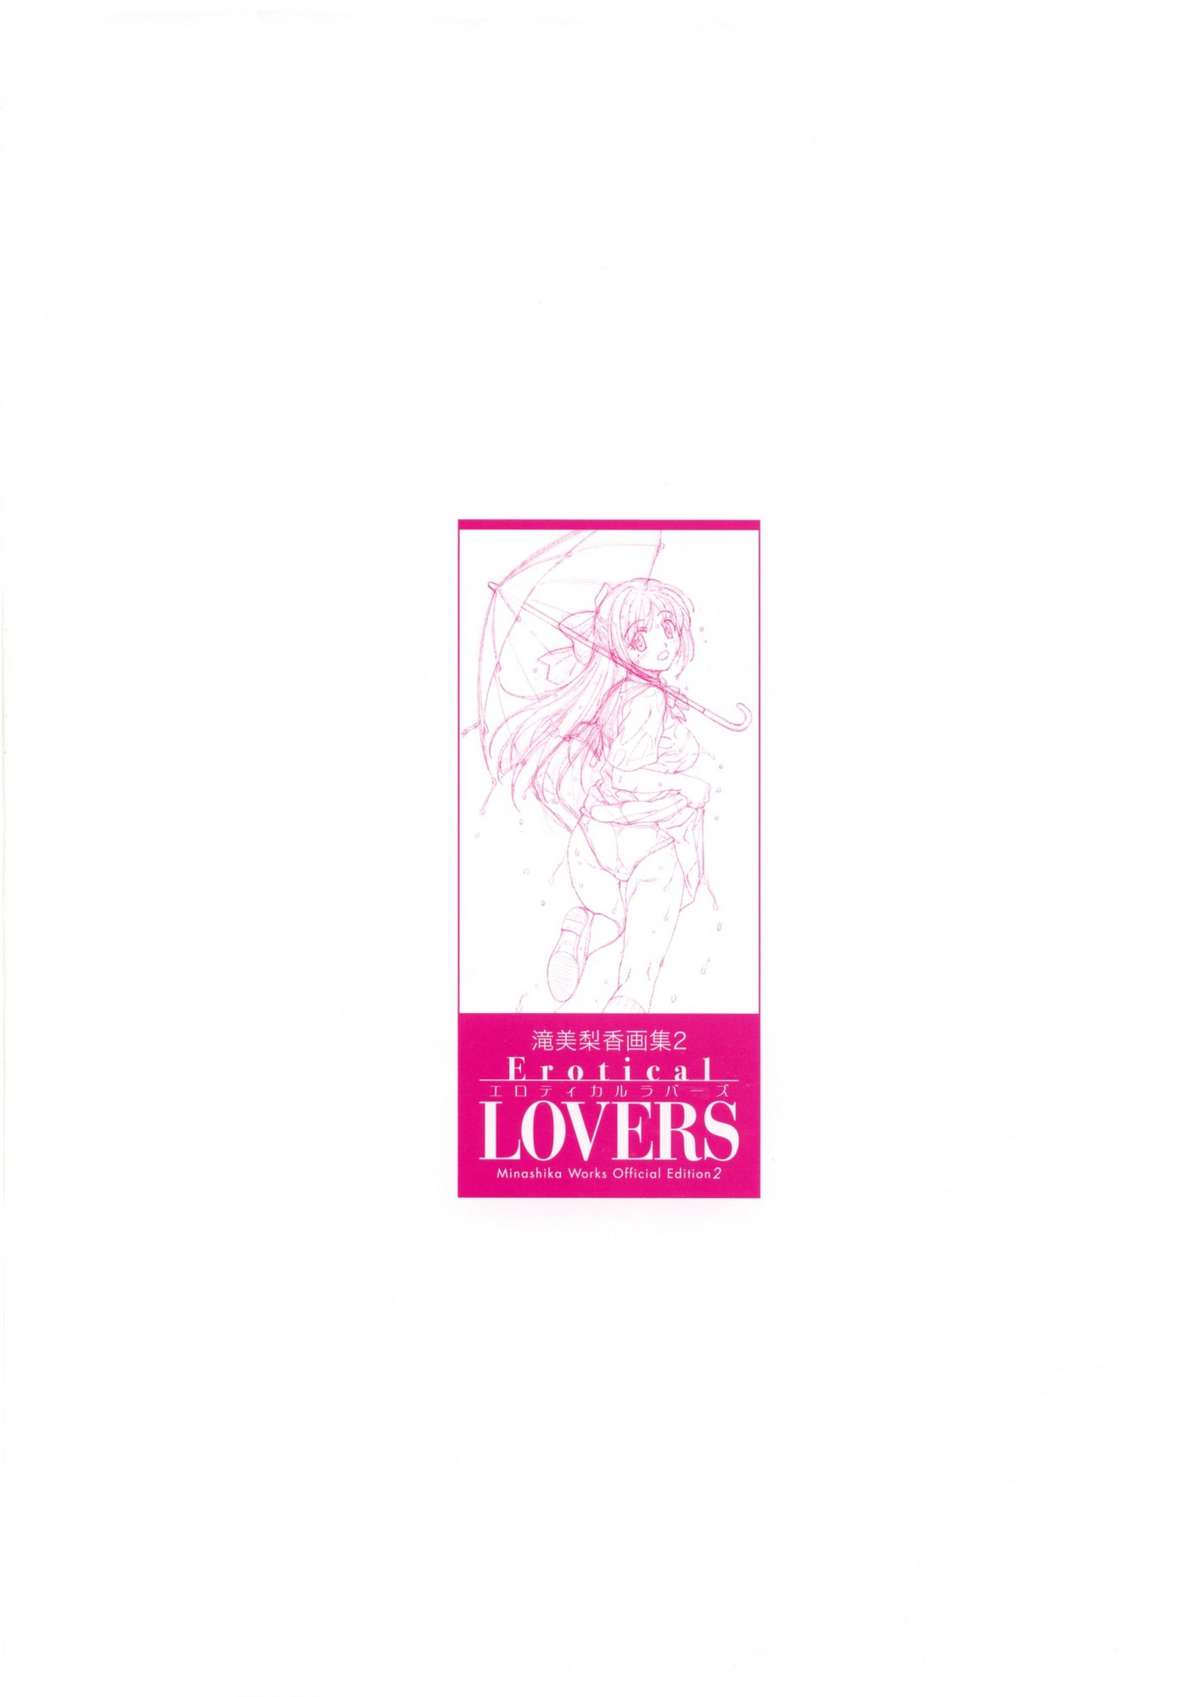 Erotical Lovers by Minashika 